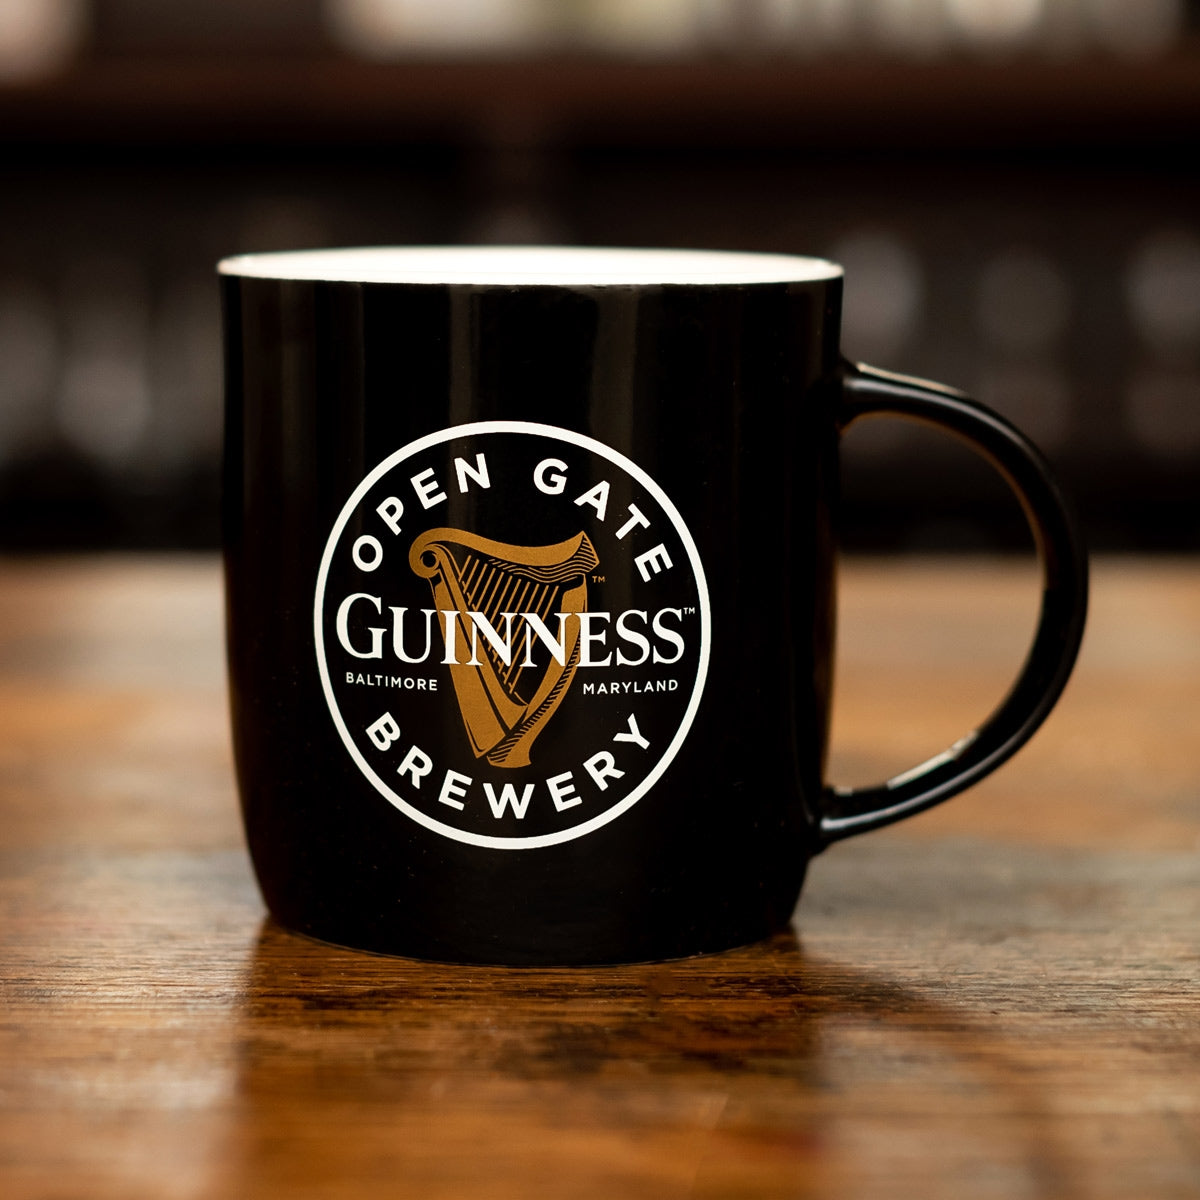 Logo-engraved Guinness Open Gate Brewery Black Ceramic Mug.